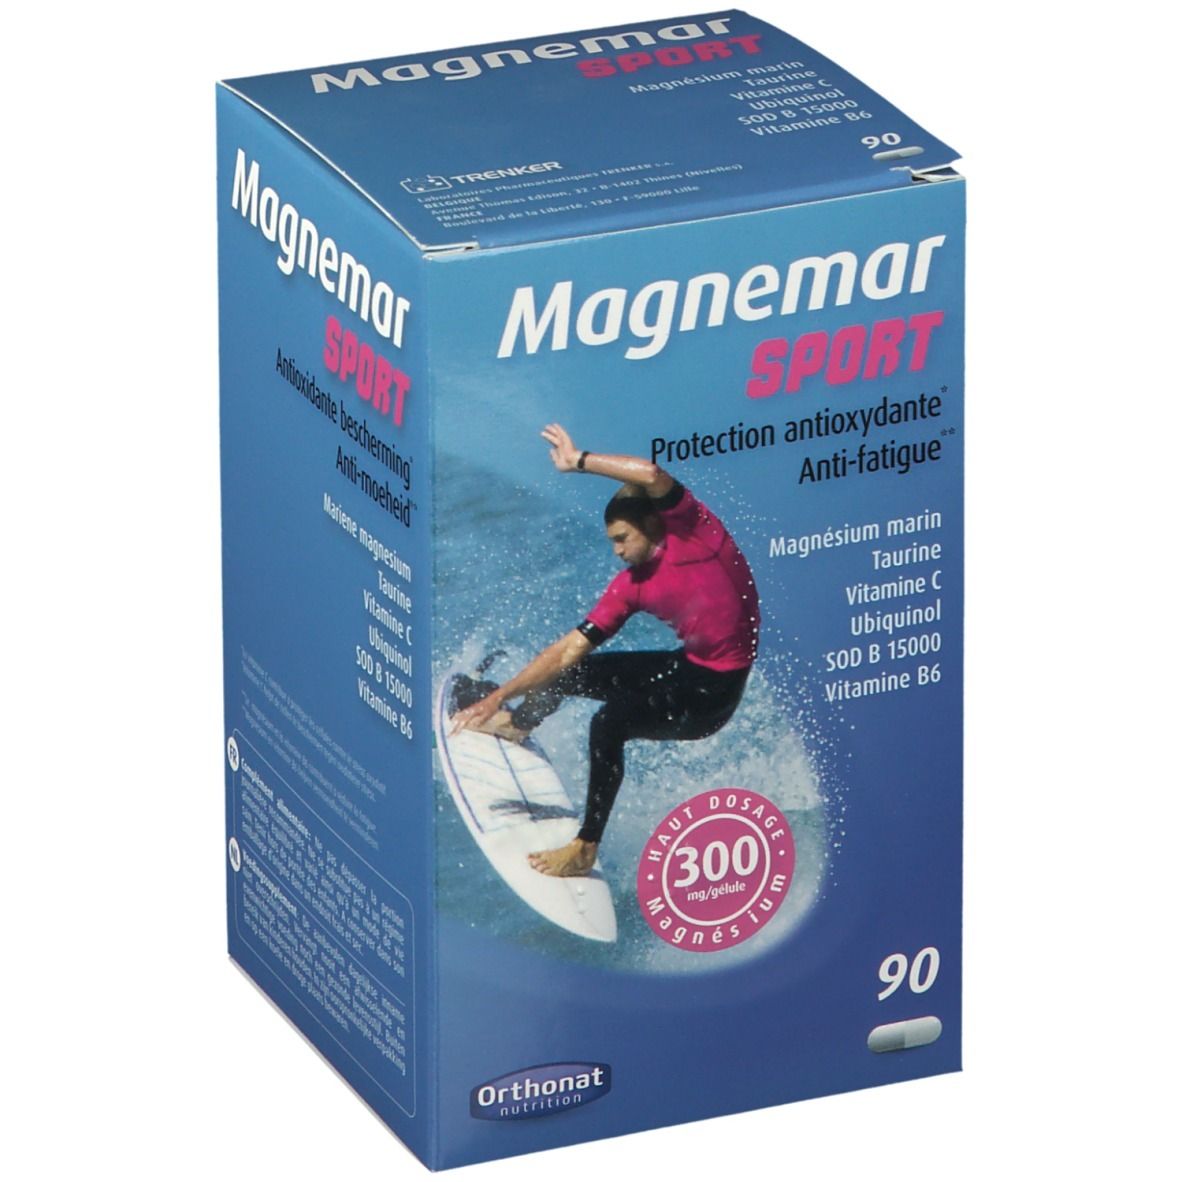 Magnemar Sport